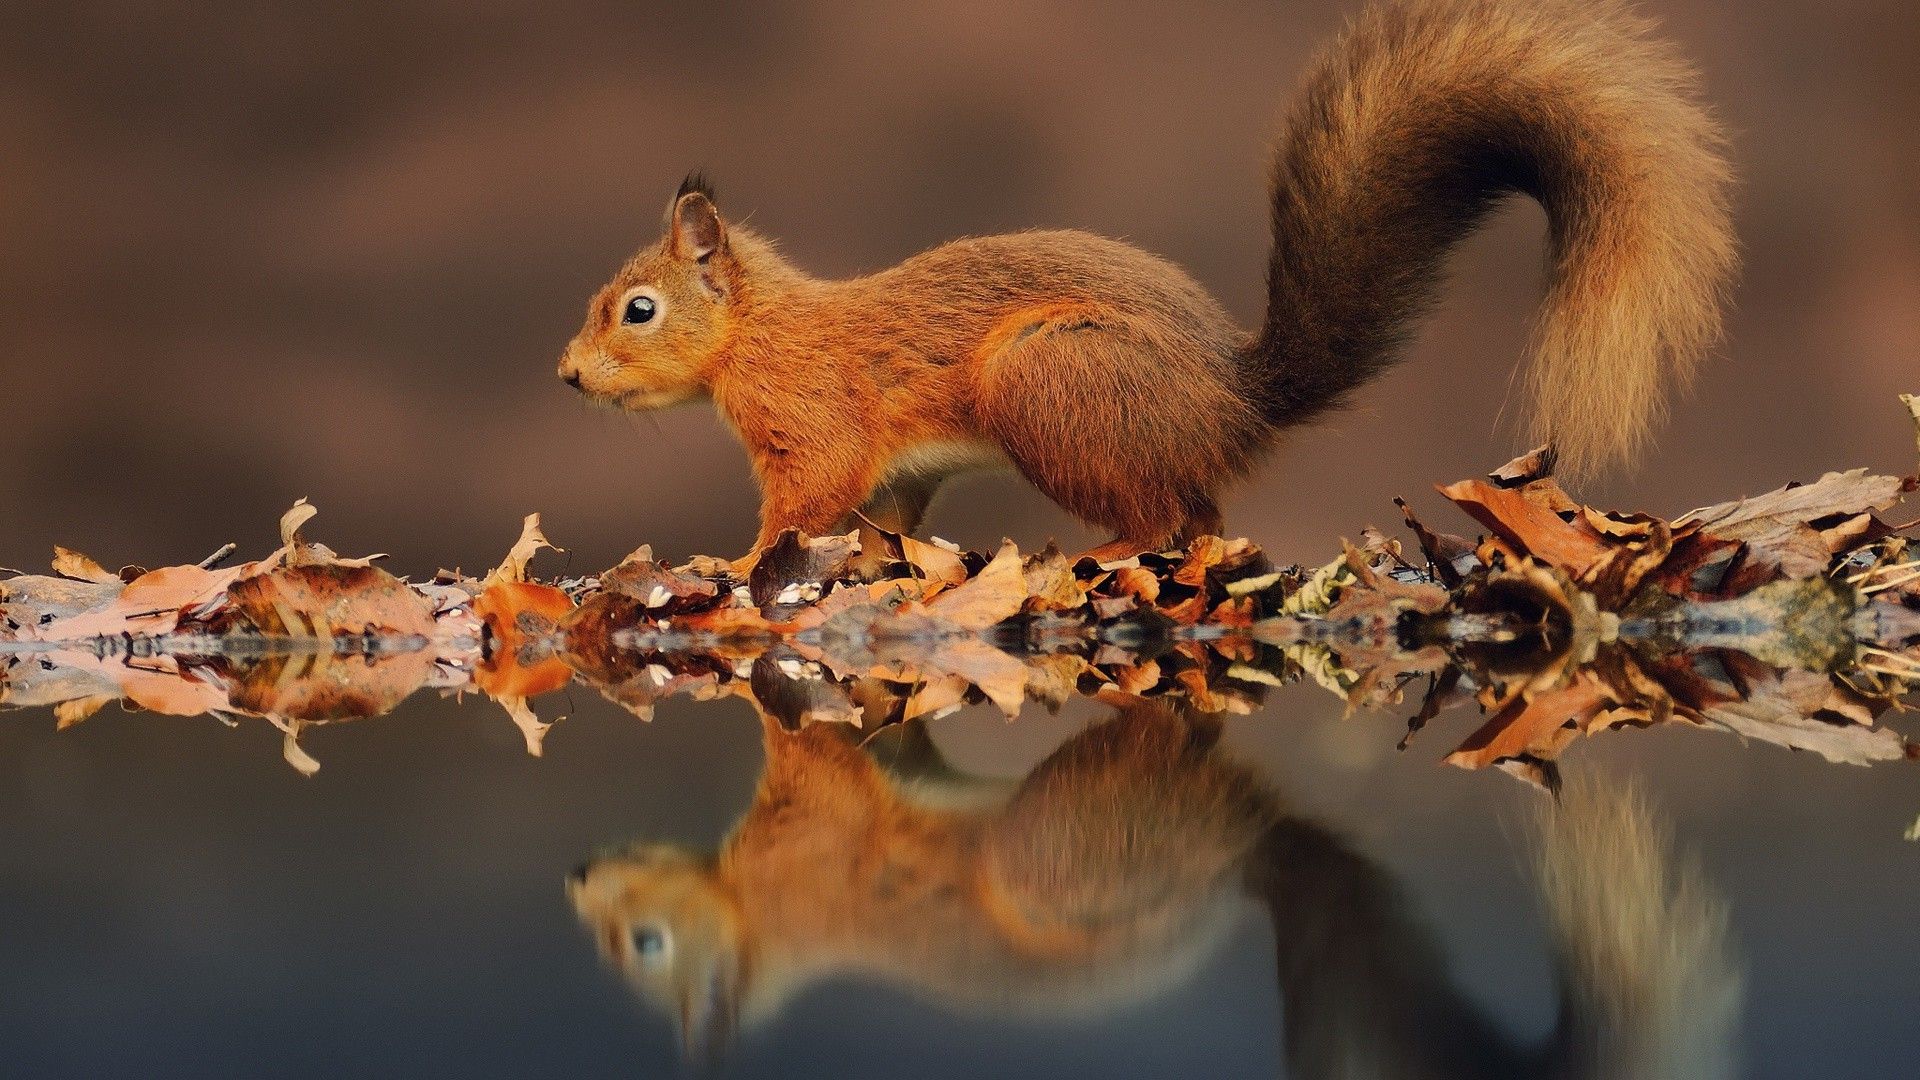 Squirrel runs on autumn leaves